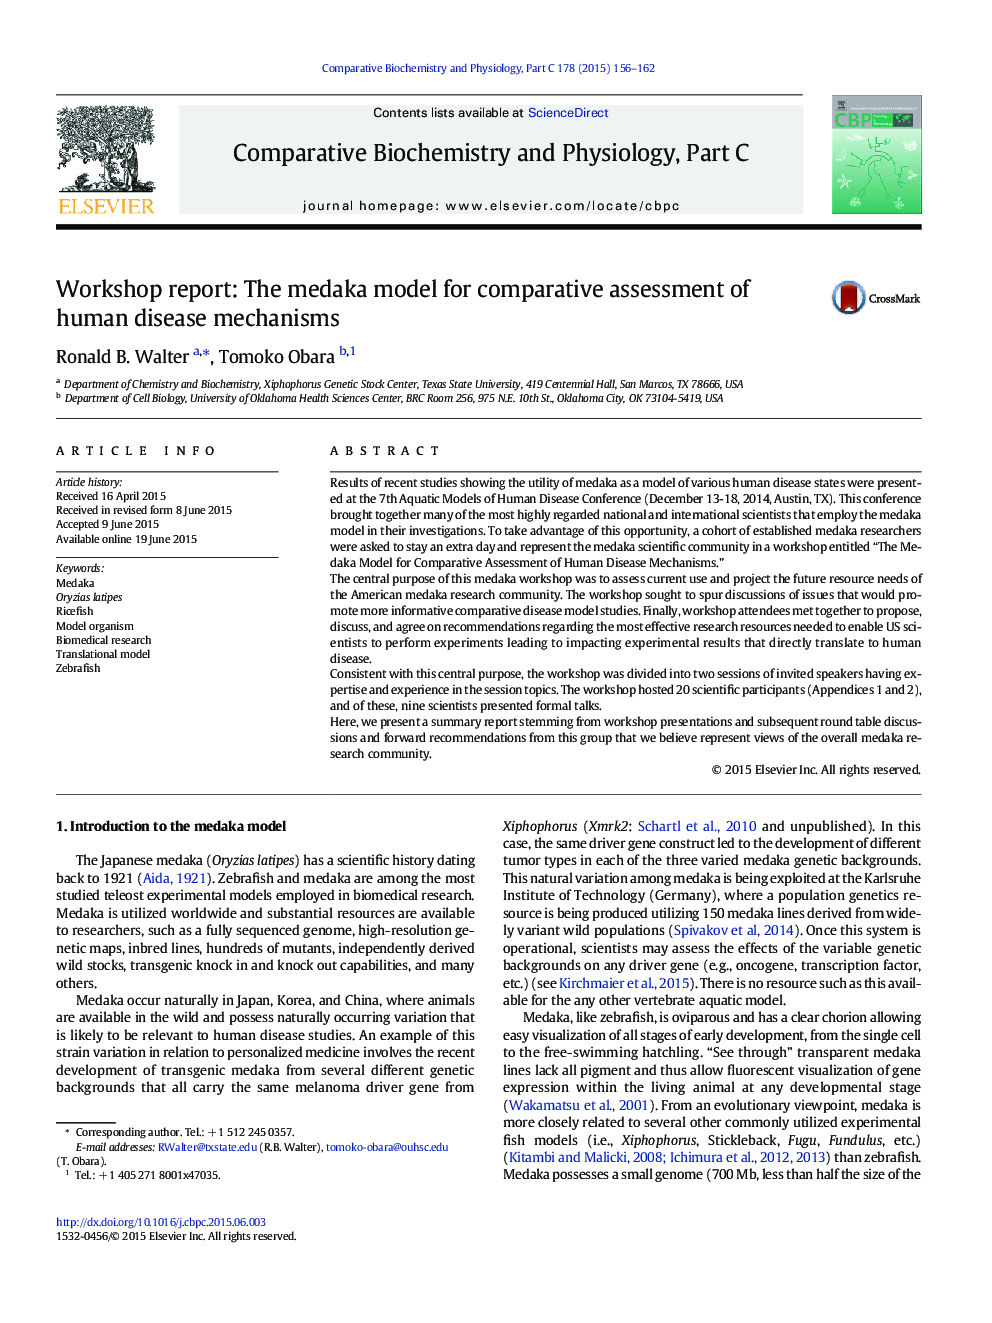 Workshop report: The medaka model for comparative assessment of human disease mechanisms